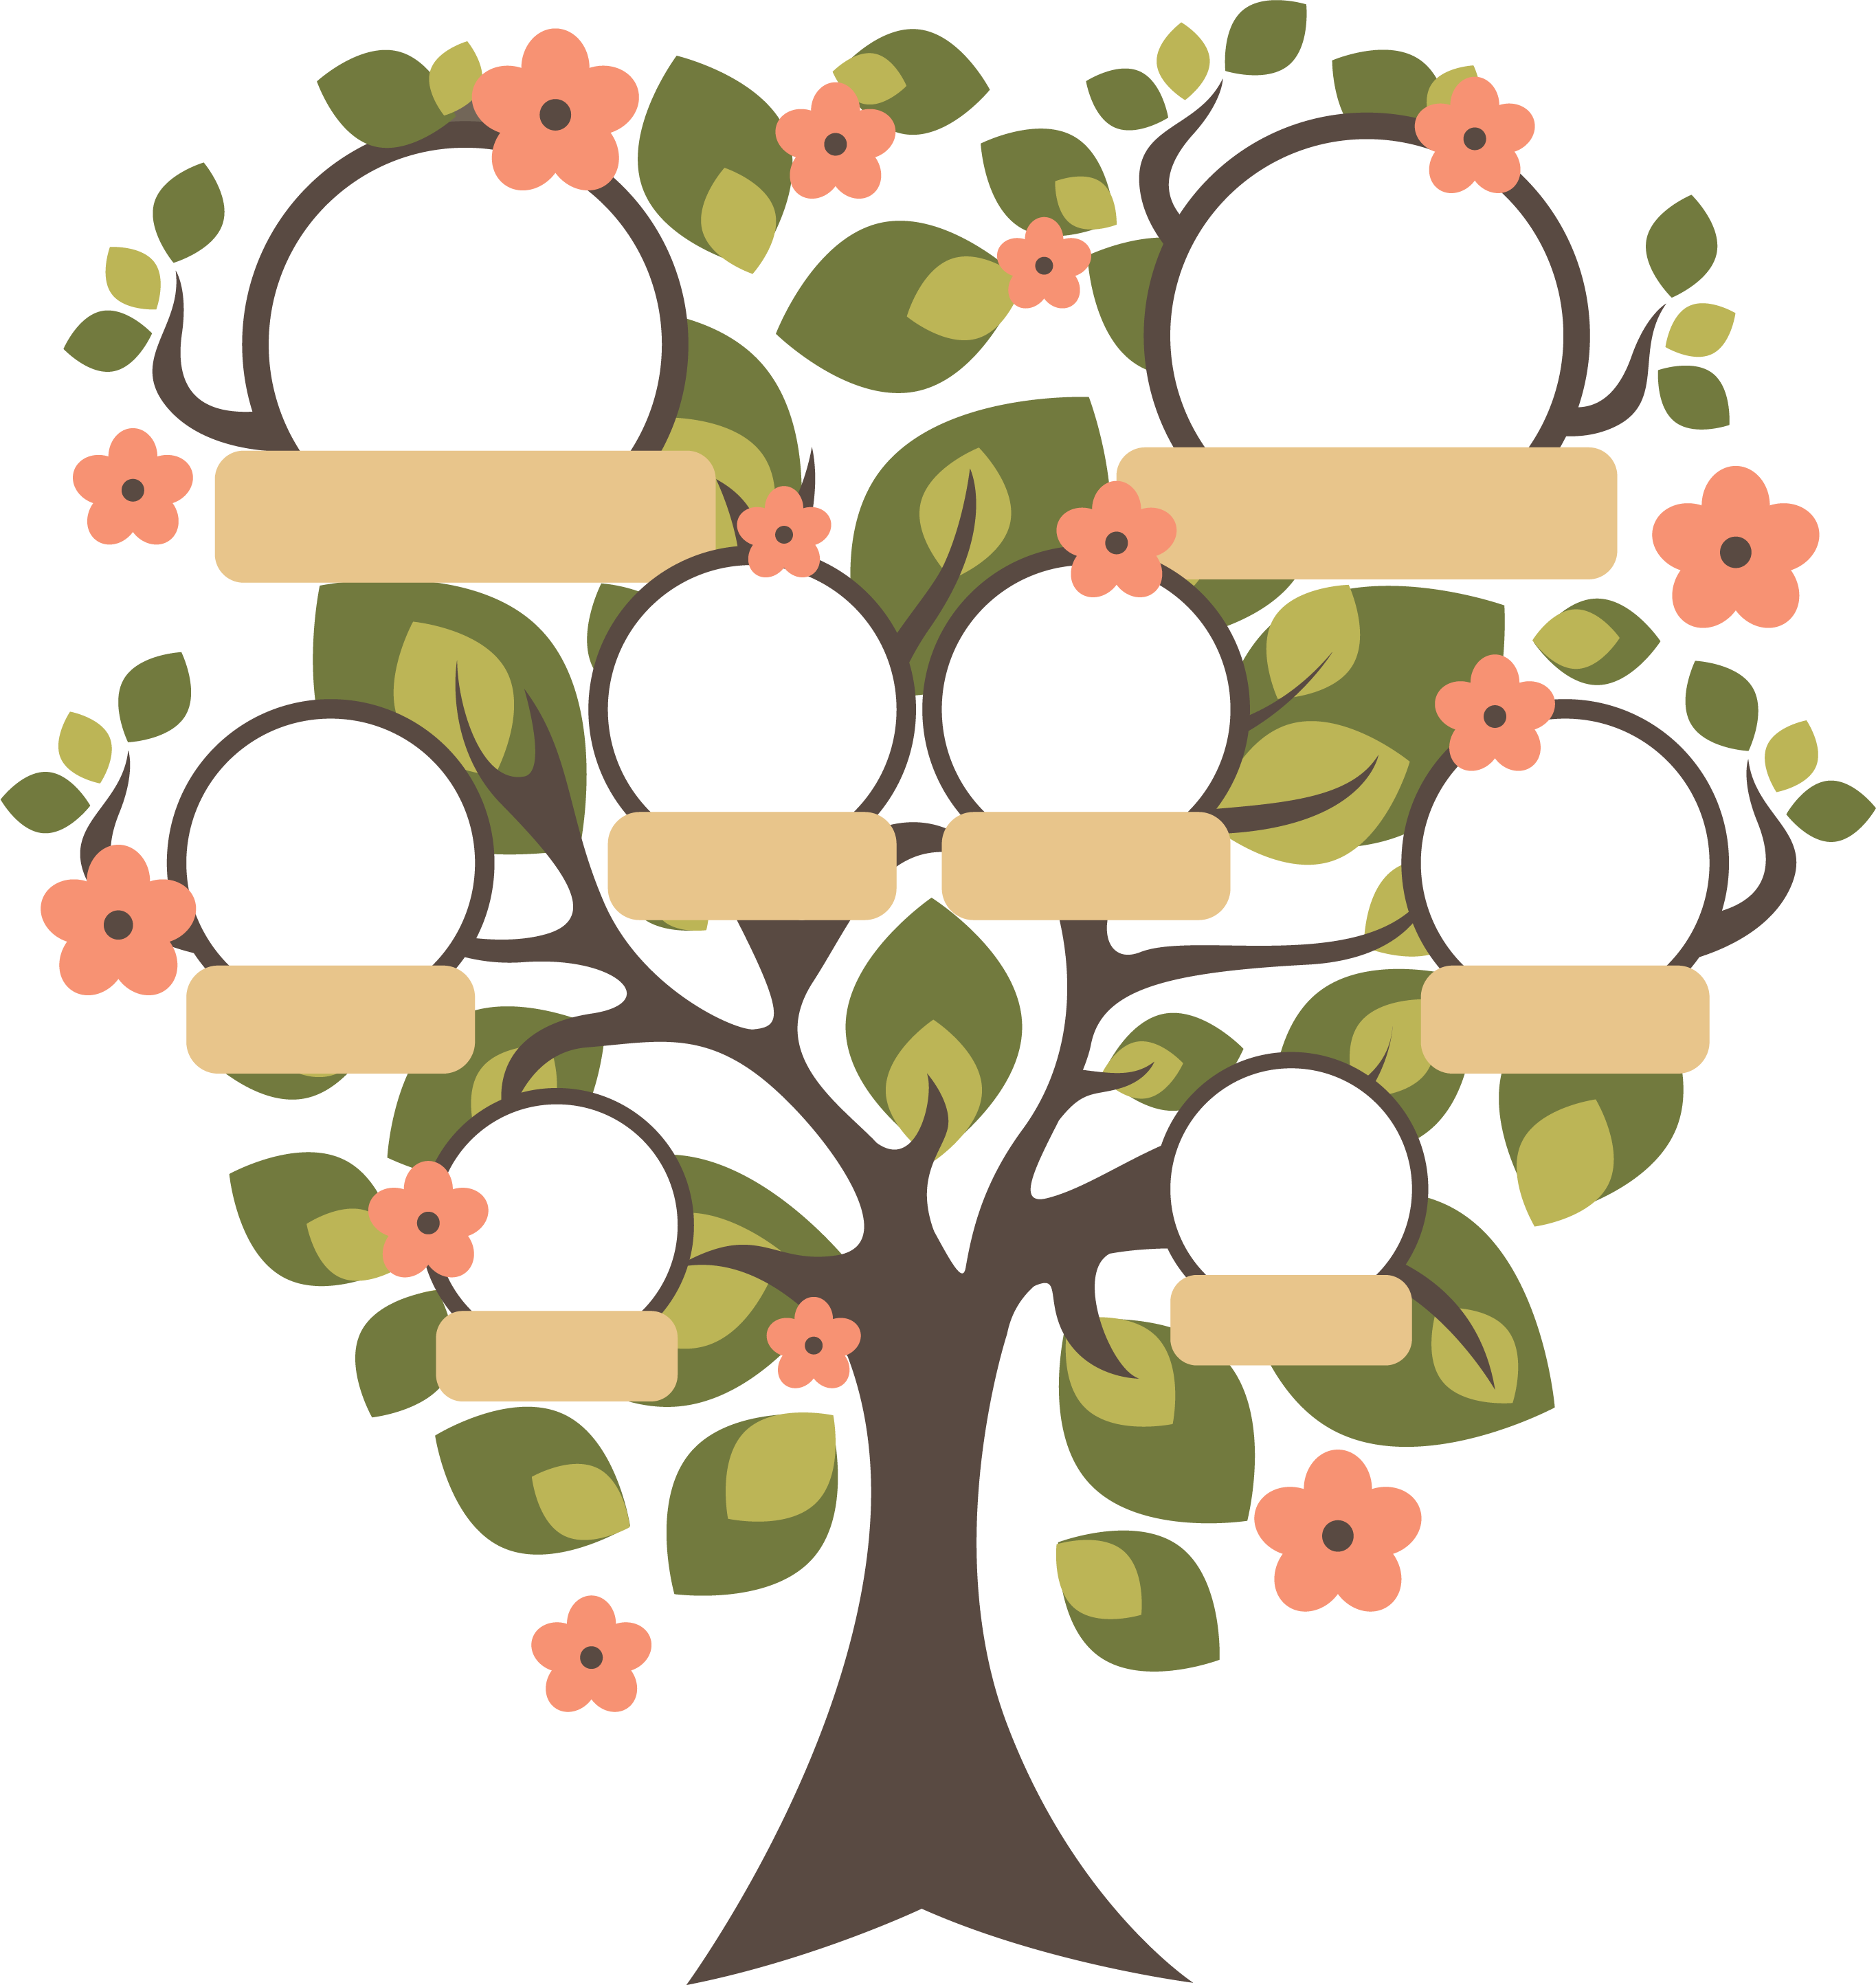 Family Tree Genealogy Childhood - Modelo De Arbol Genealogico (2730x2888)